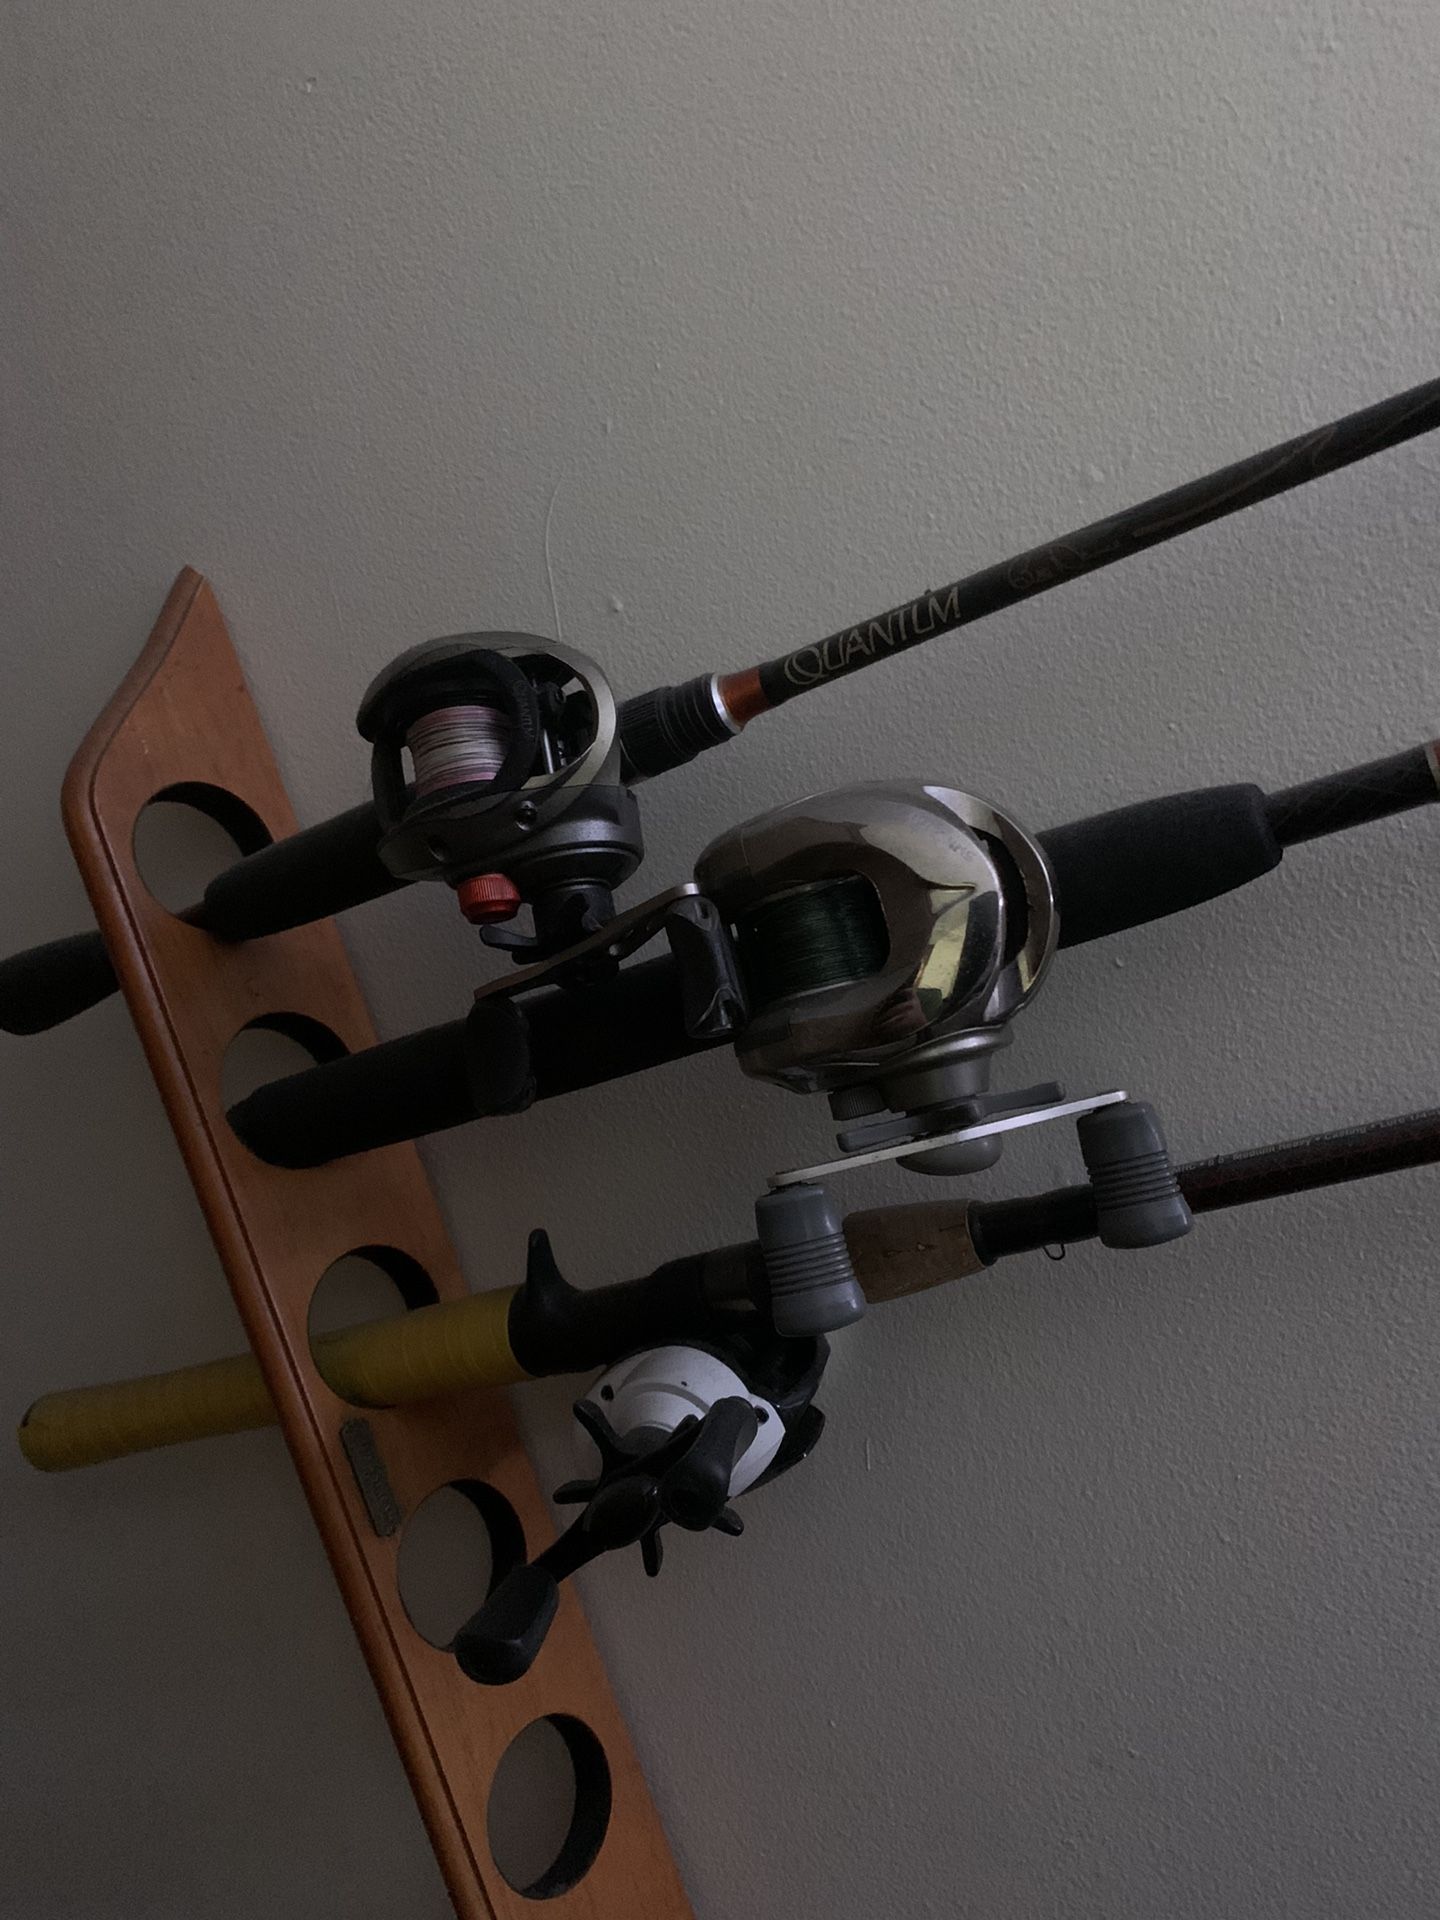 Fishing Rods. 